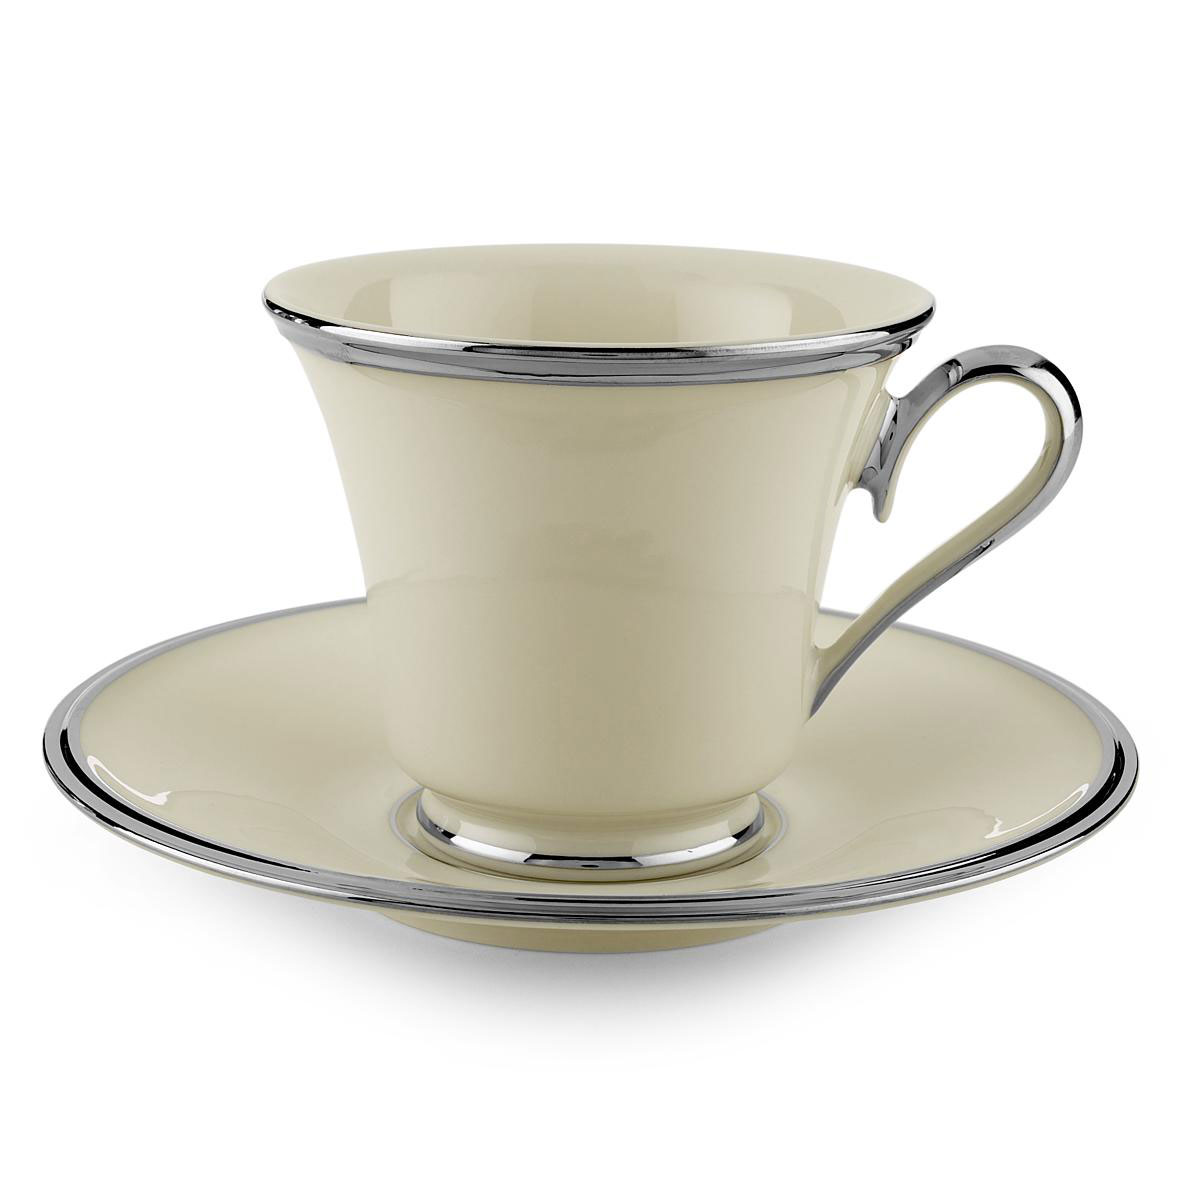 Lenox Solitaire Dinnerware Teacup